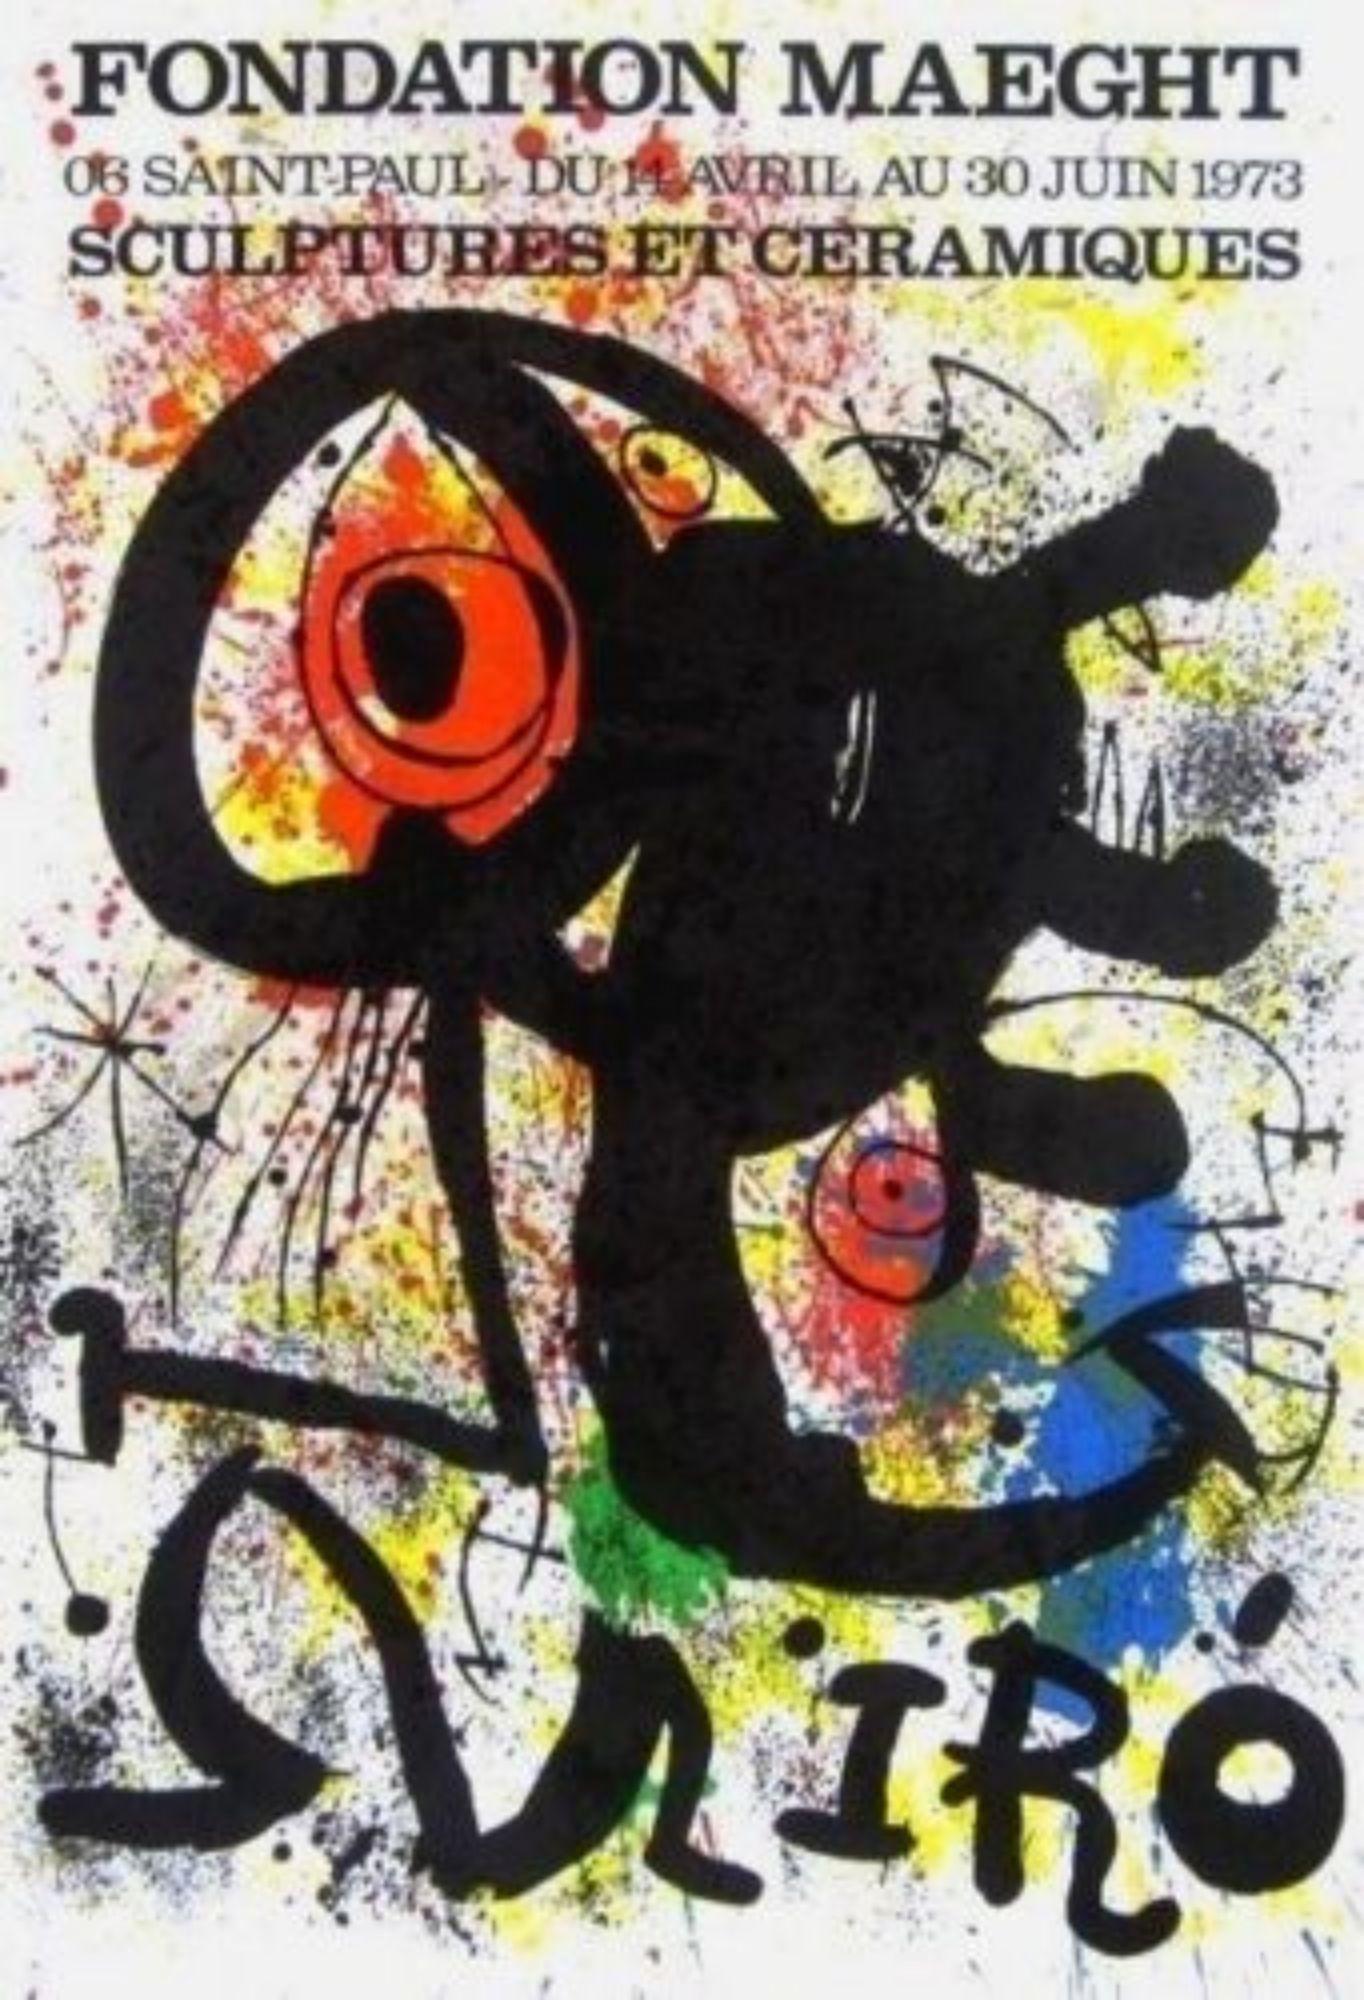 Joan Miró Abstract Print - Miro, Sculptures et Ceramics